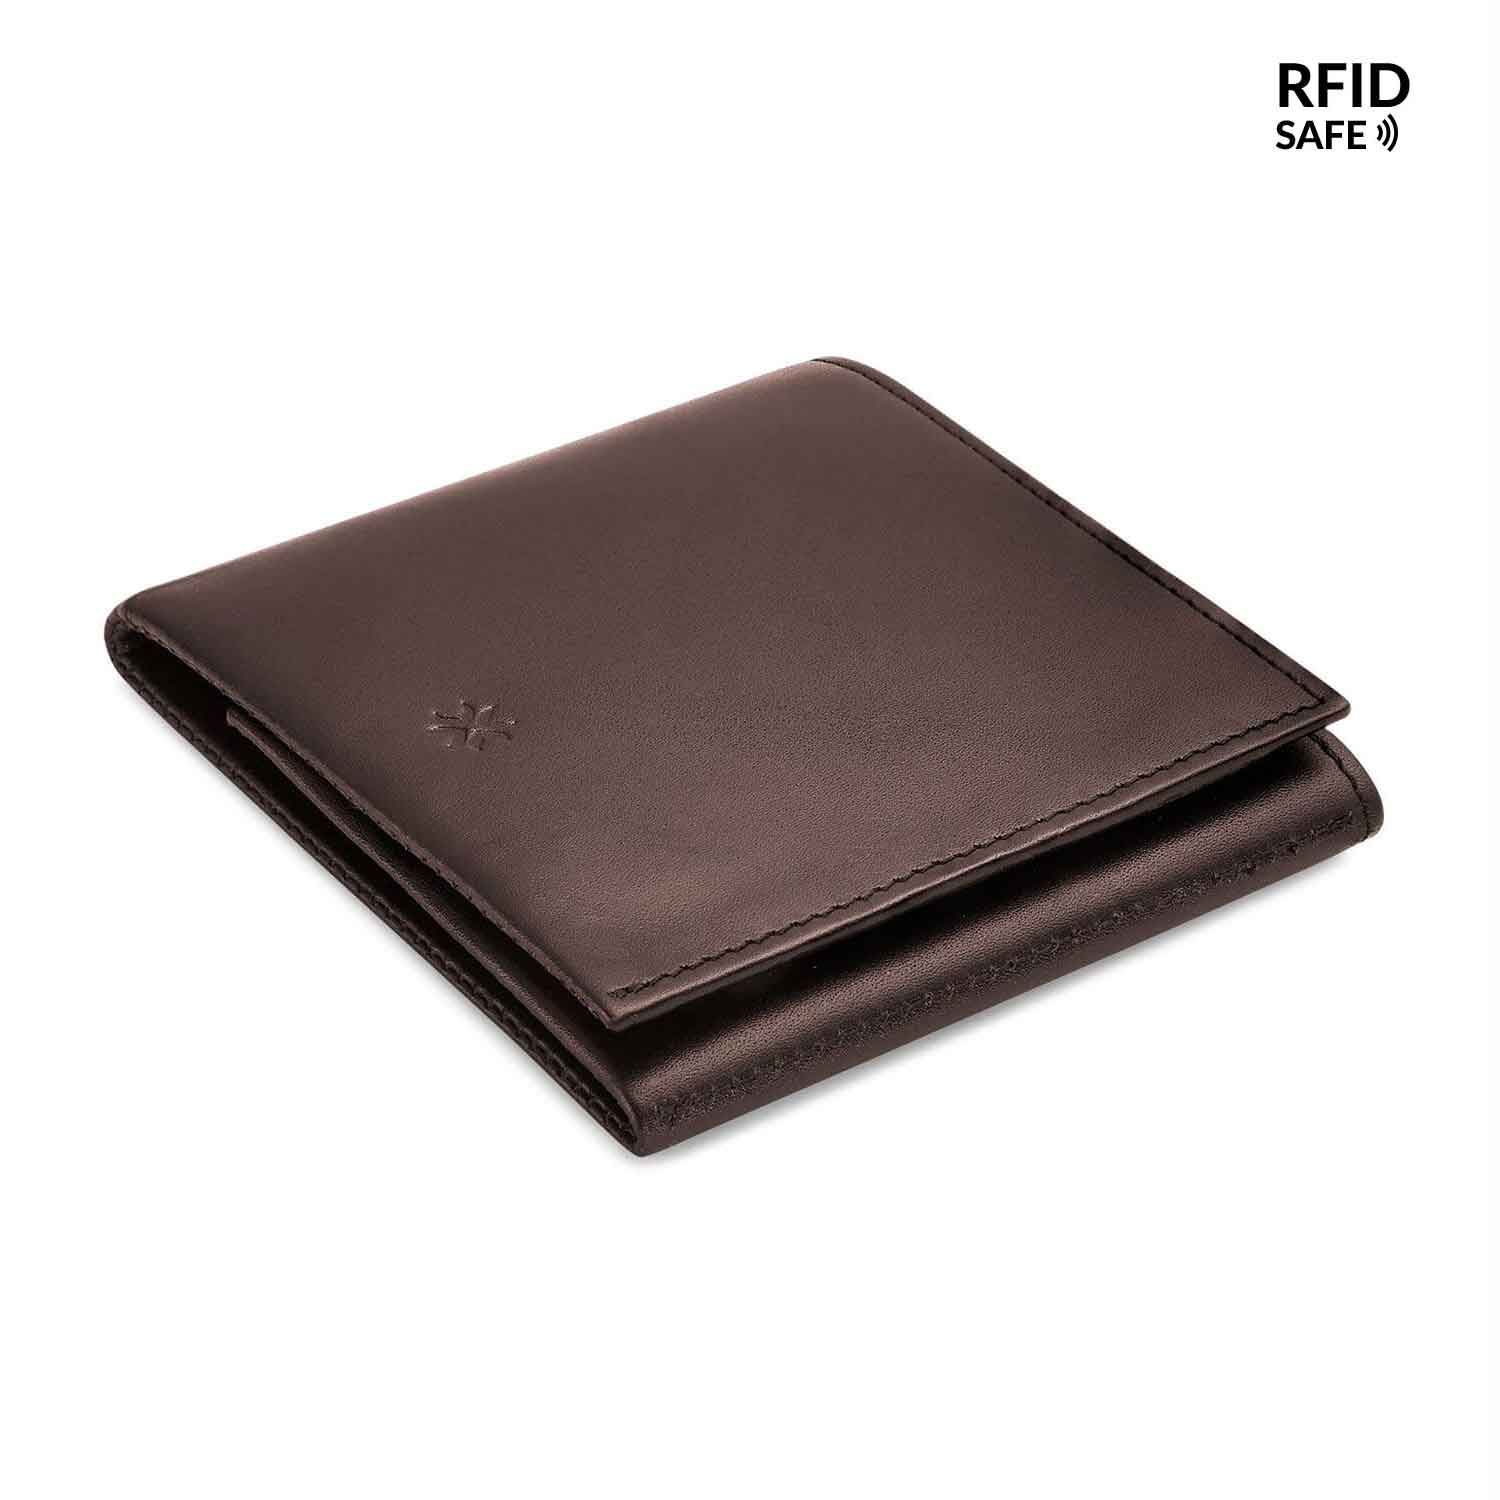 Pennline Rfid Safe Slim Minimalistic Trifold Leather Wallet